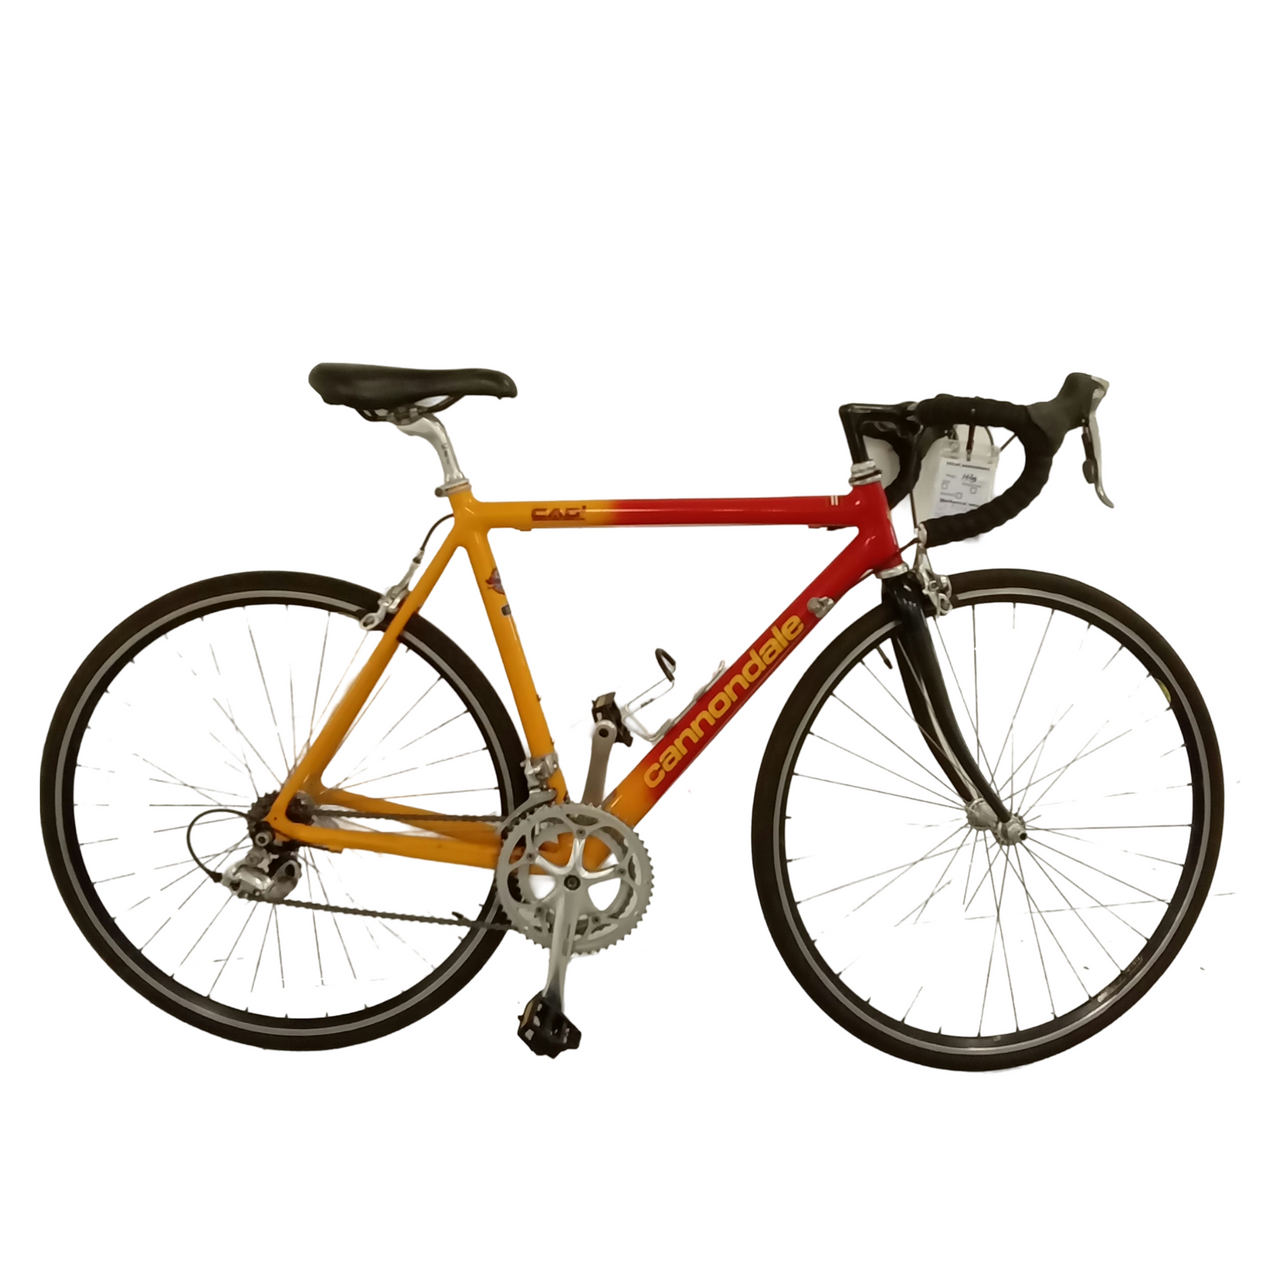 1703 - 52cm Yellow,
Red, Road Bike, Bike